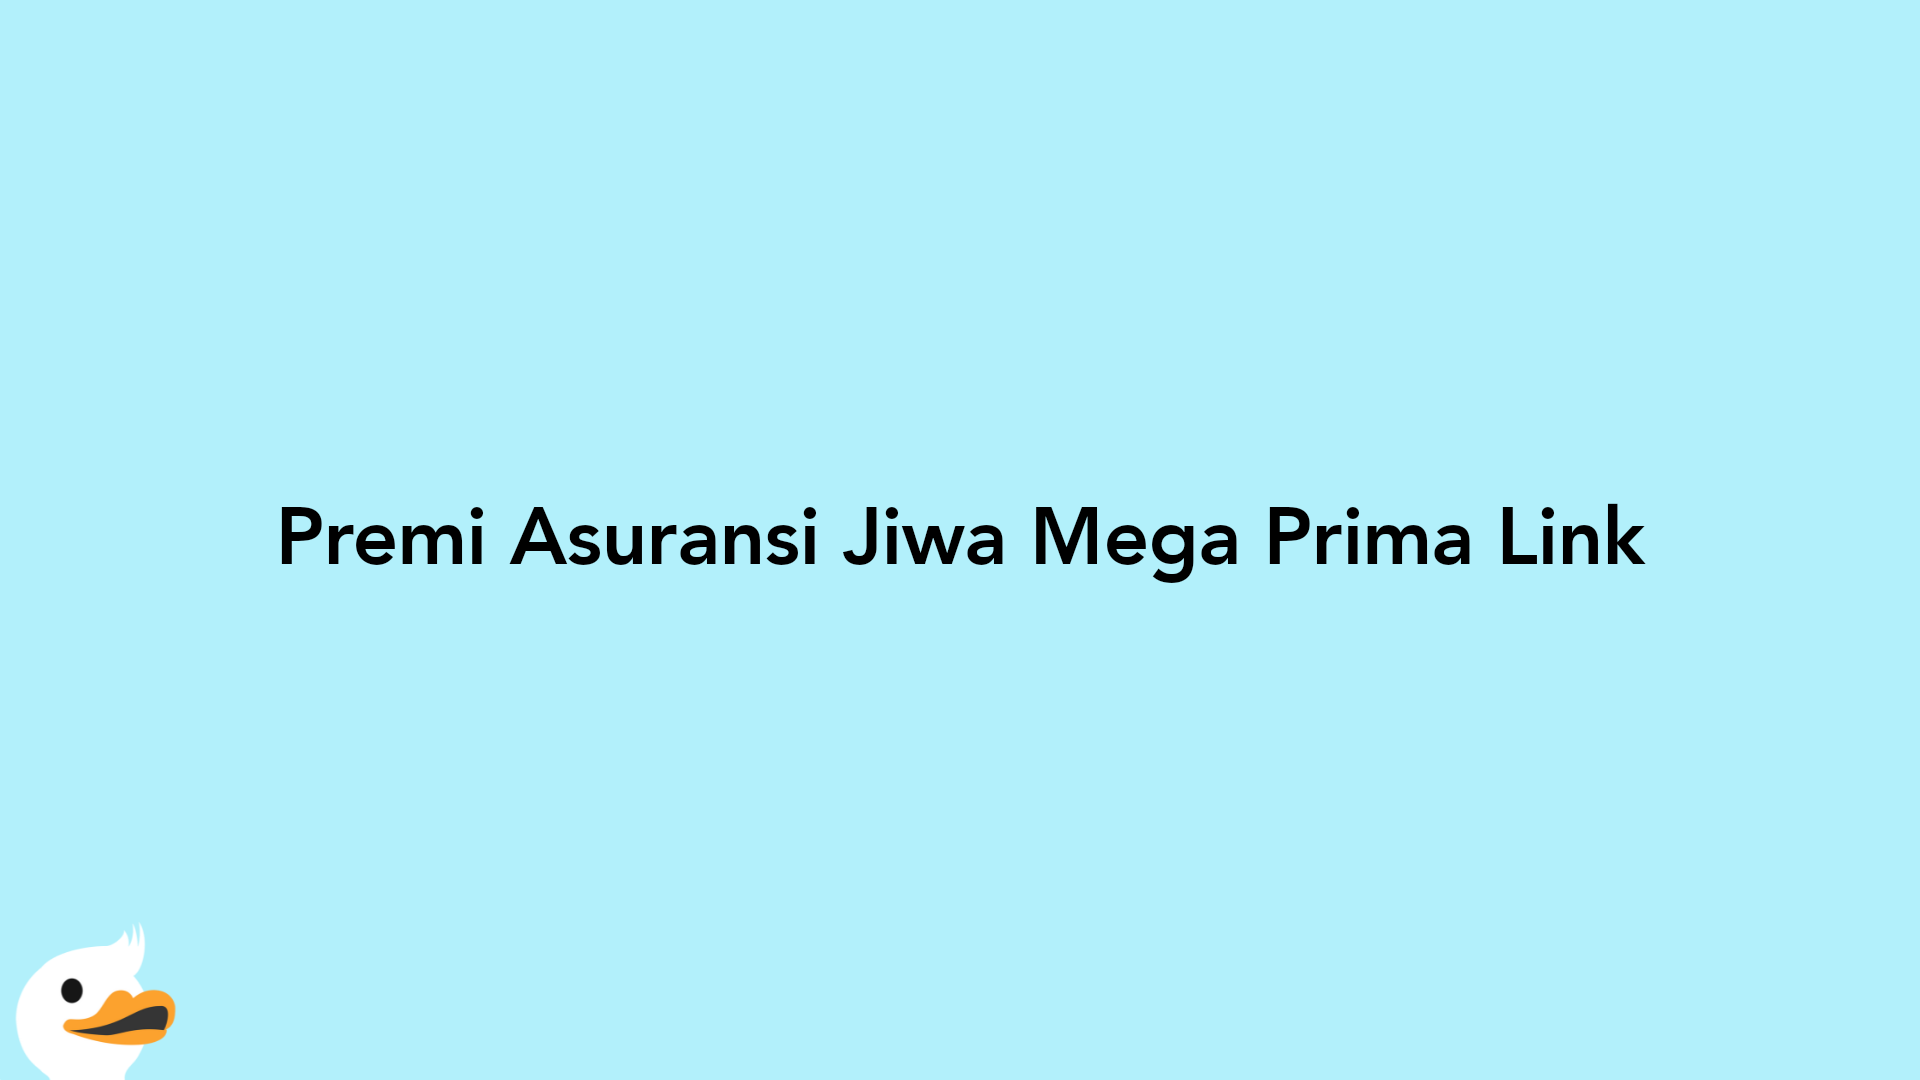 Premi Asuransi Jiwa Mega Prima Link